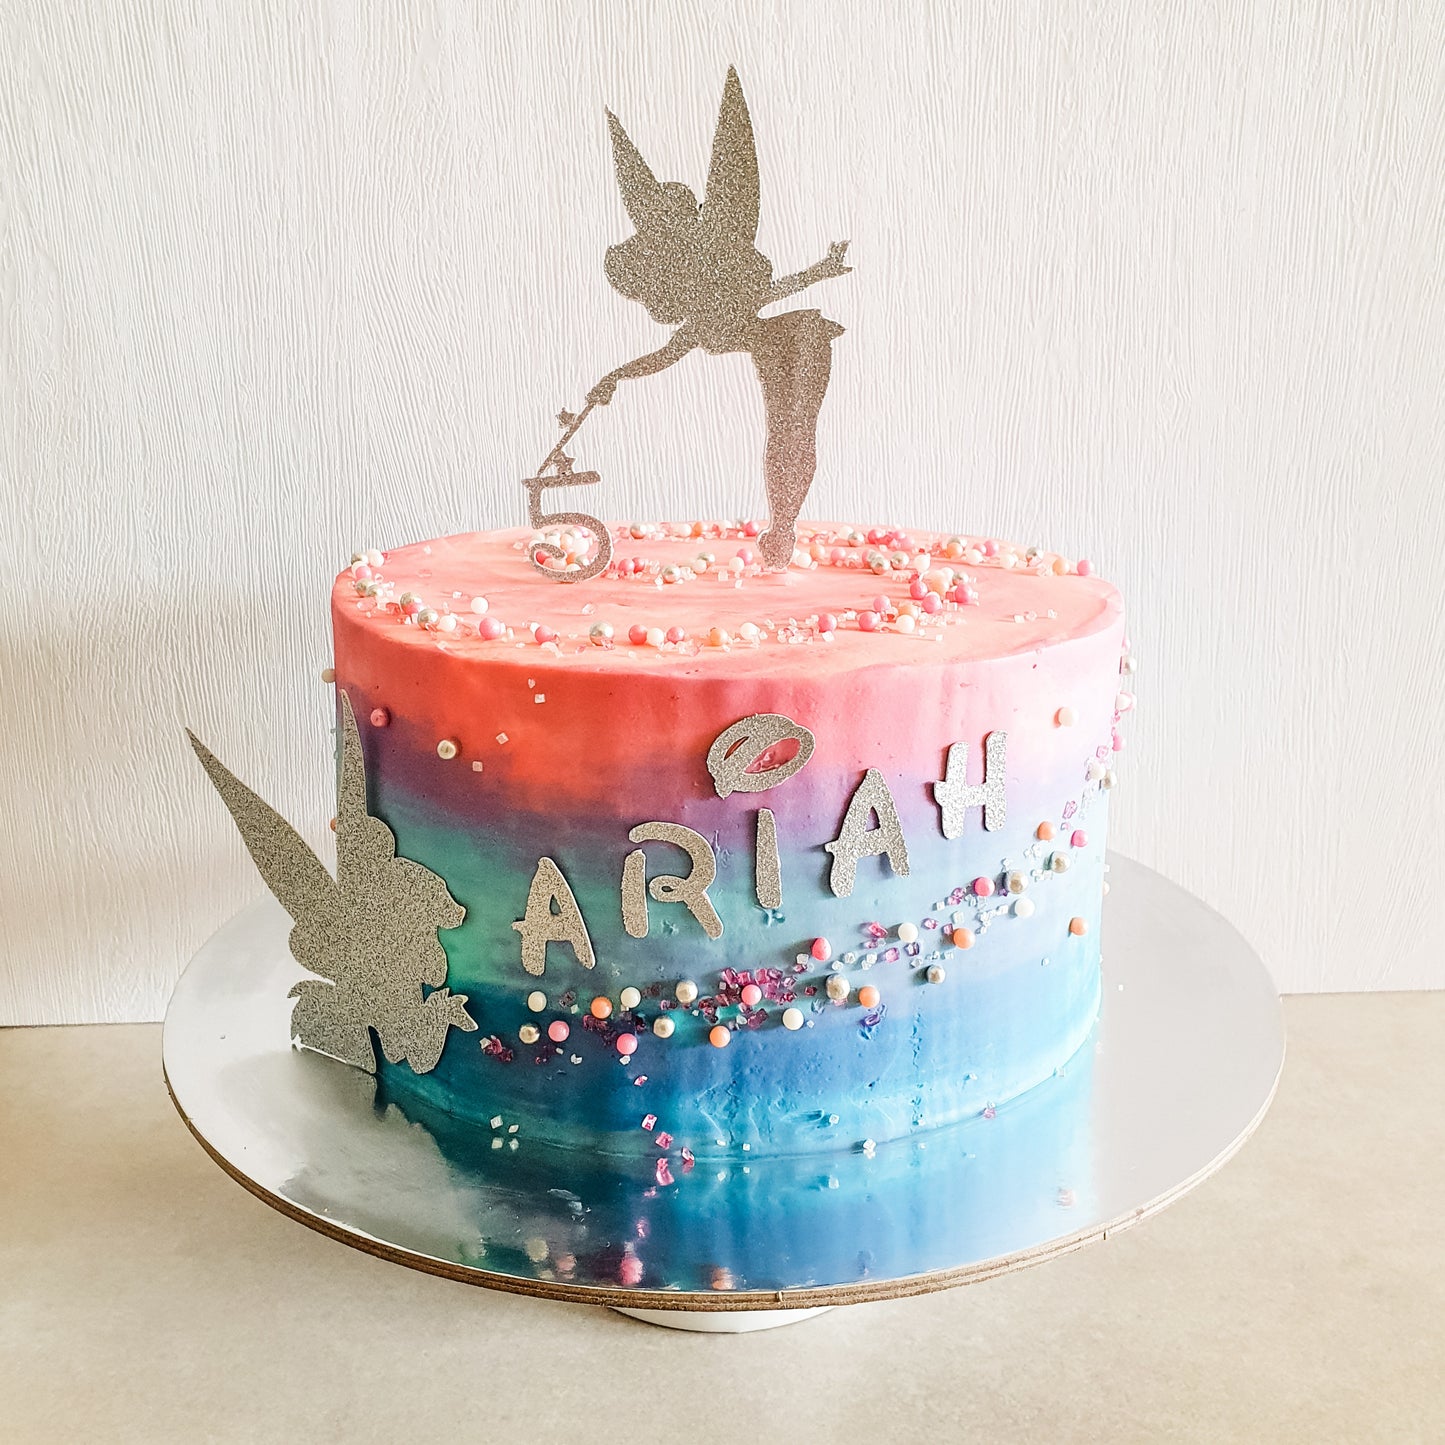 Fairy theme cake